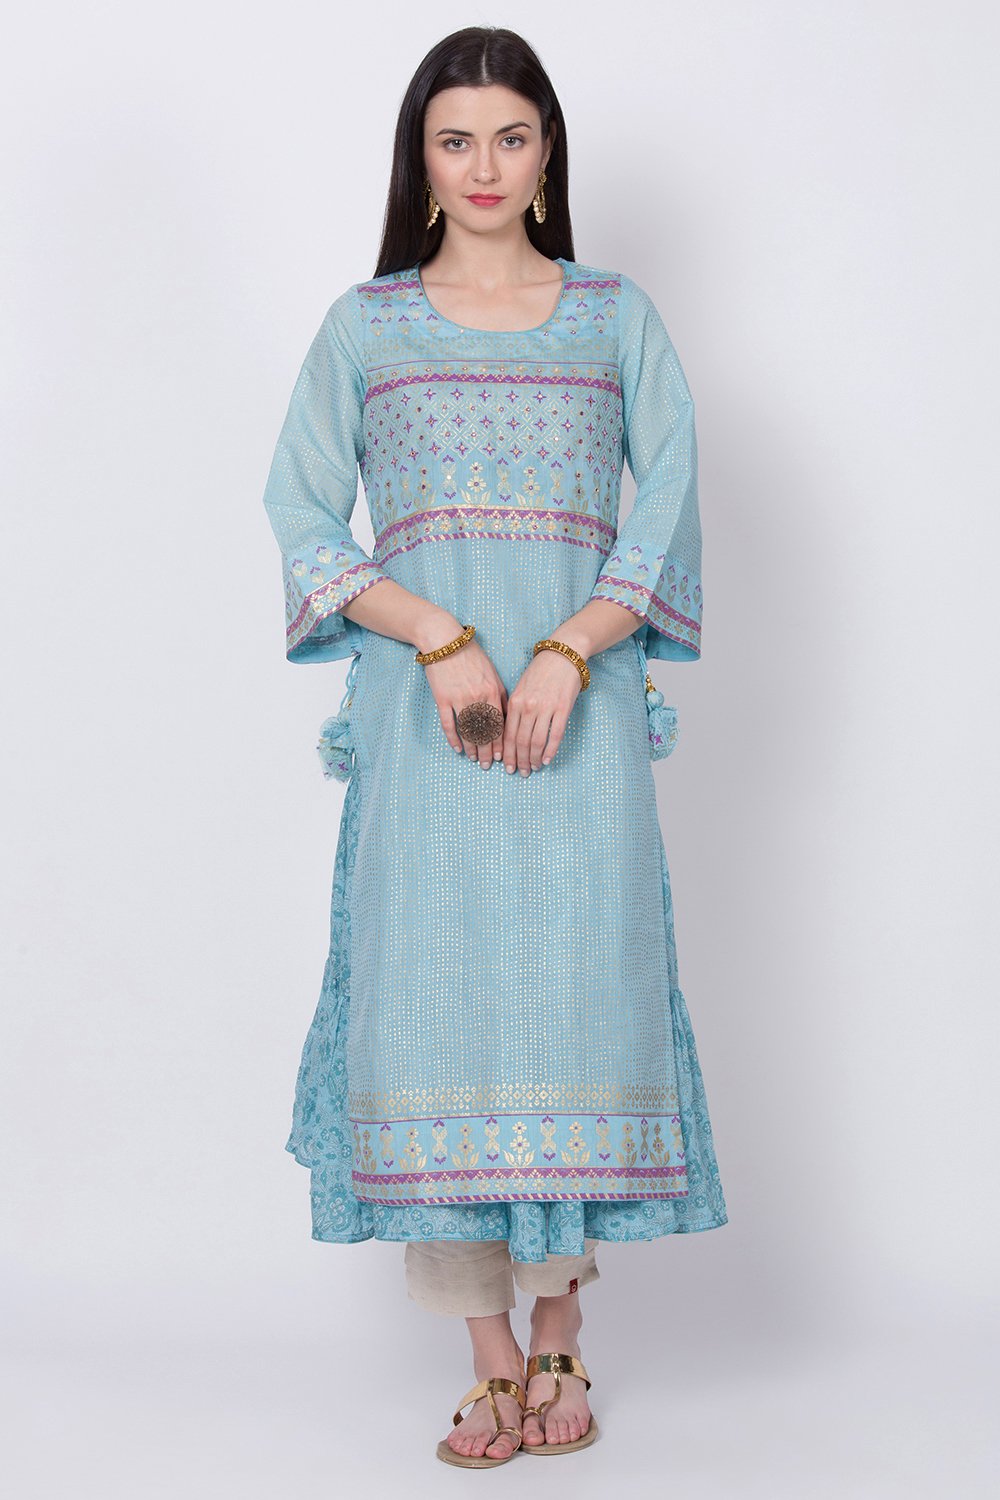 Buy Blue Art Silk Flared Printed Kurta for INR2497.50 |Biba India